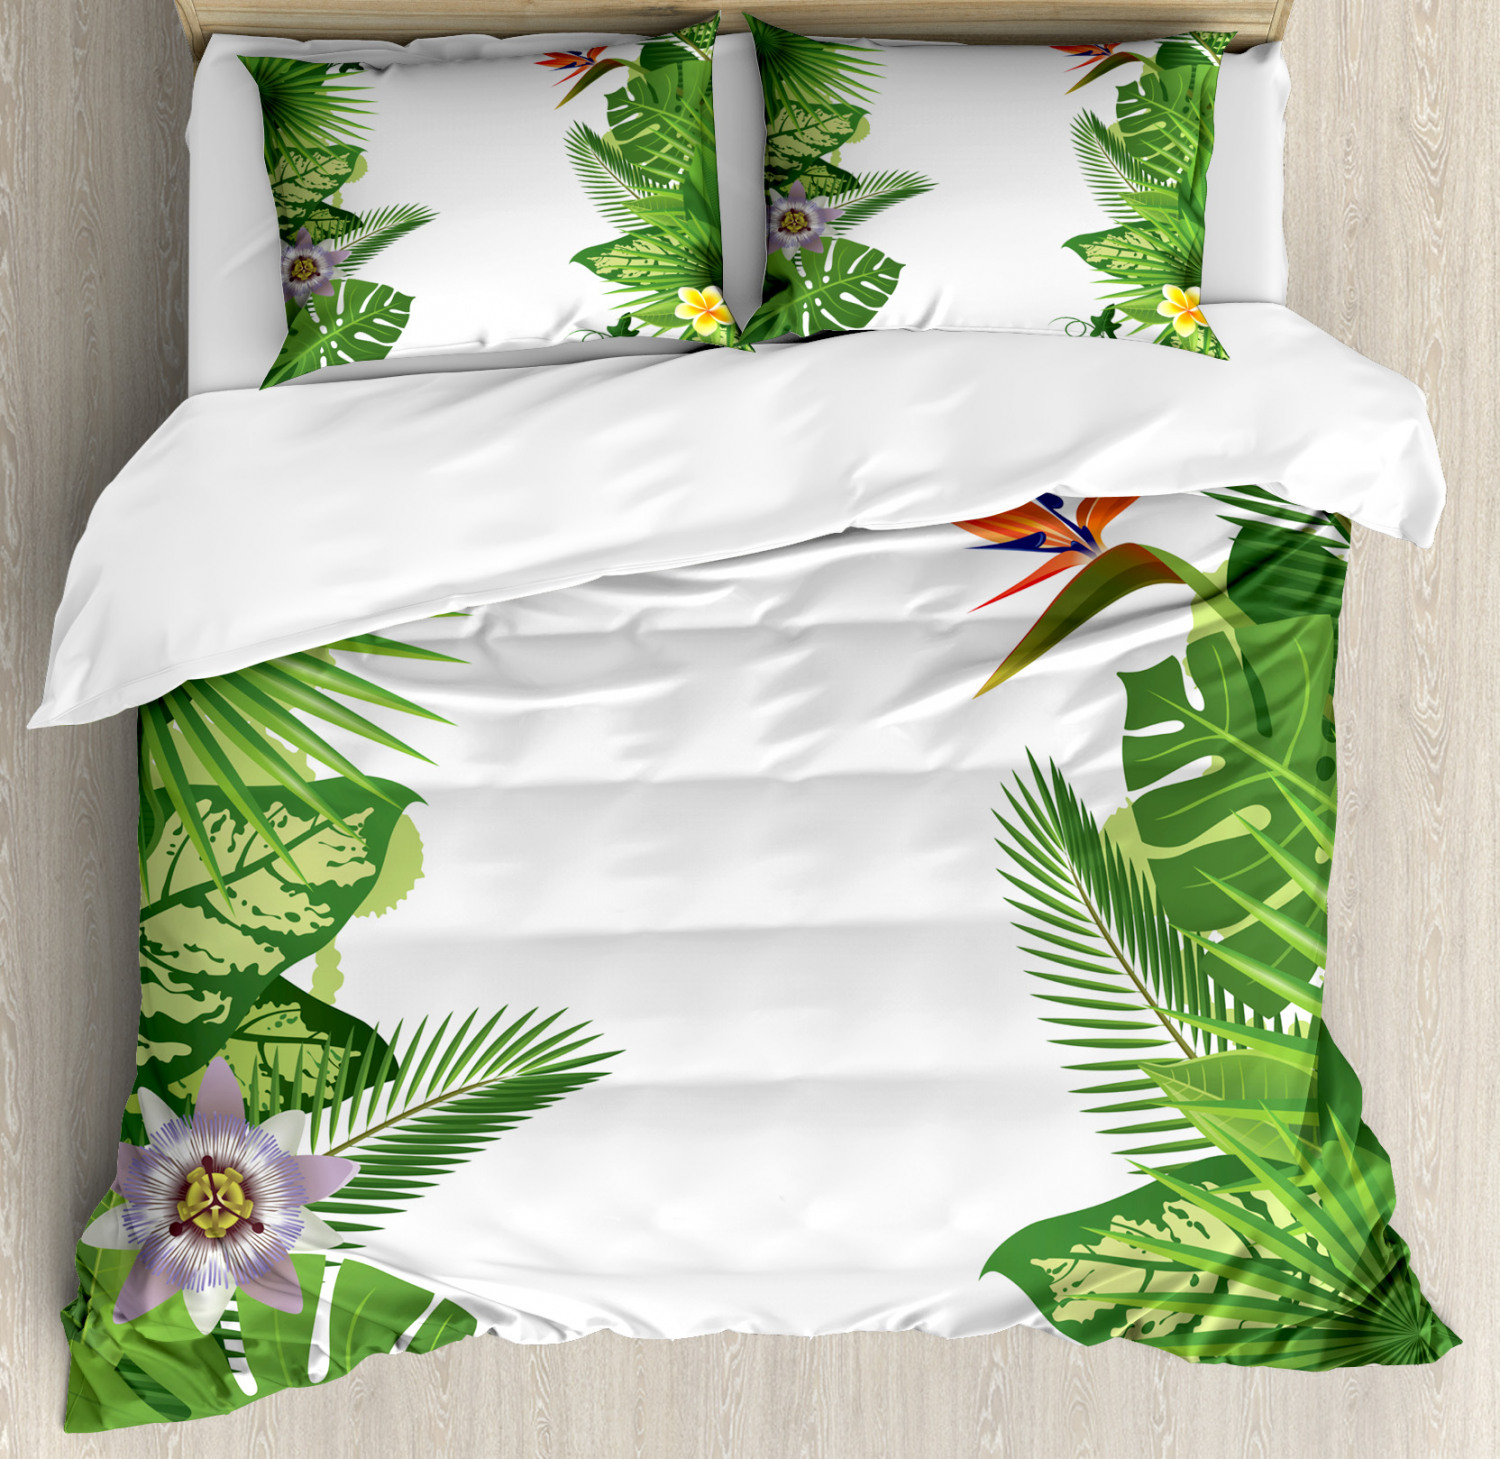 Tropical Duvet Cover Set With Pillow Shams Lush Growth Rainforest